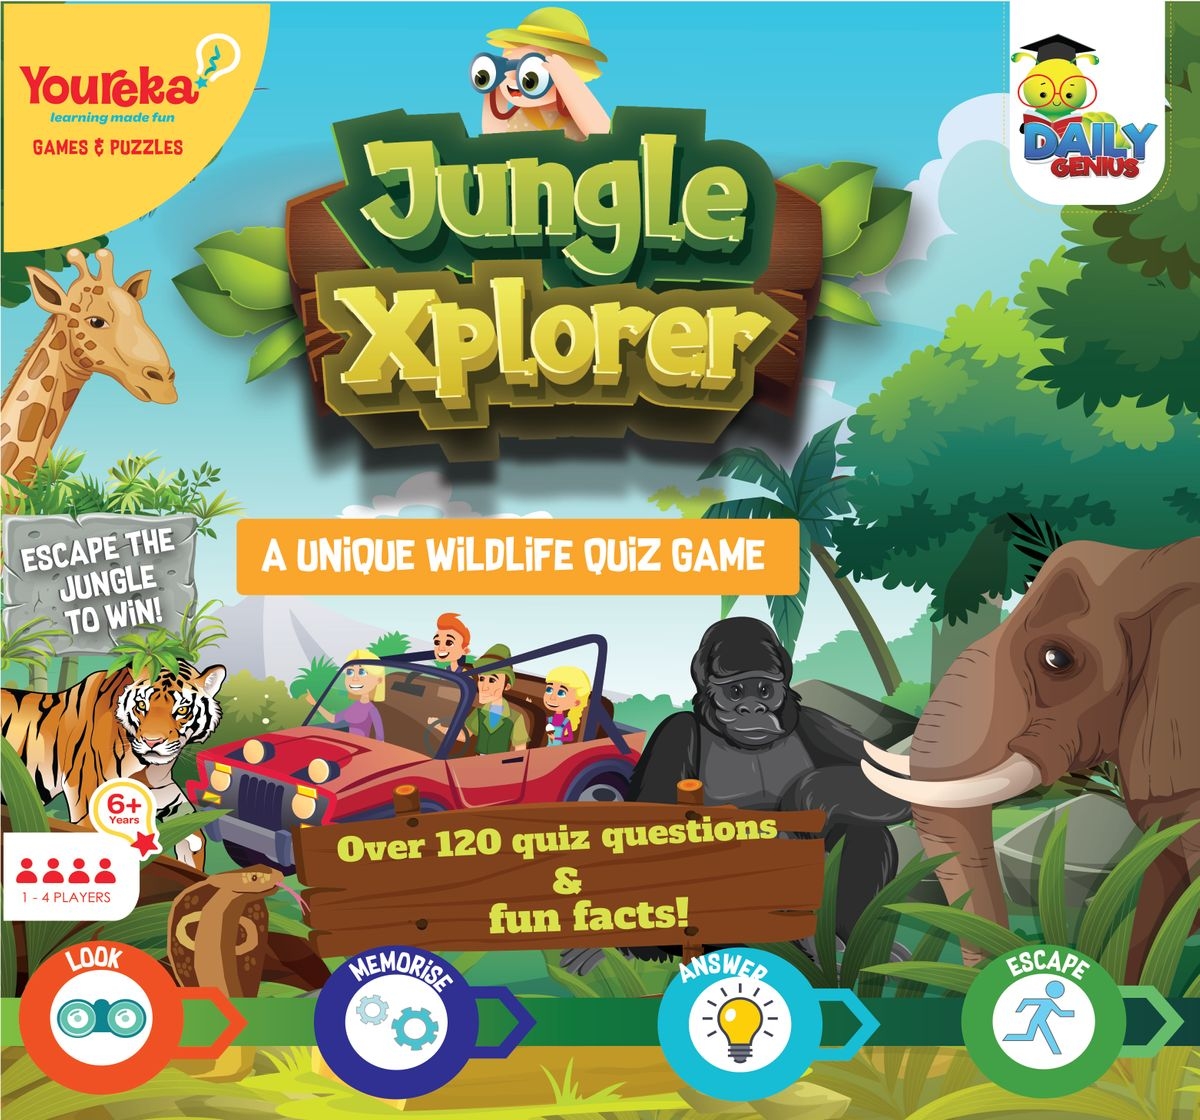 Youreka Jungle Xplorer for 6 Years +